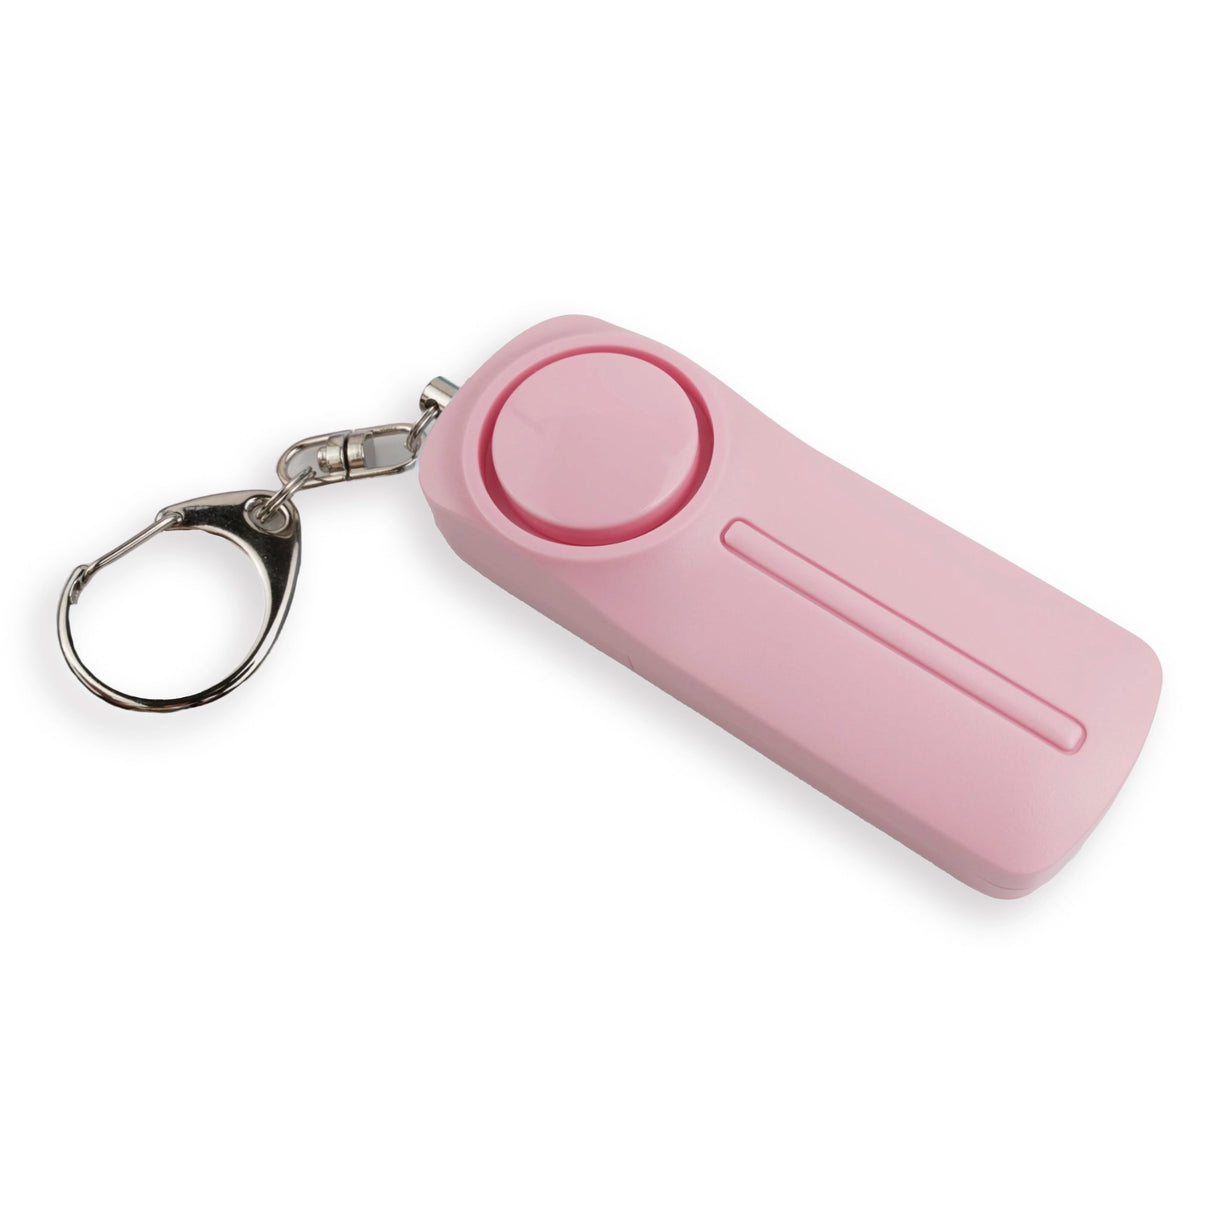 Alarm & Light Key Chain - Light Pink